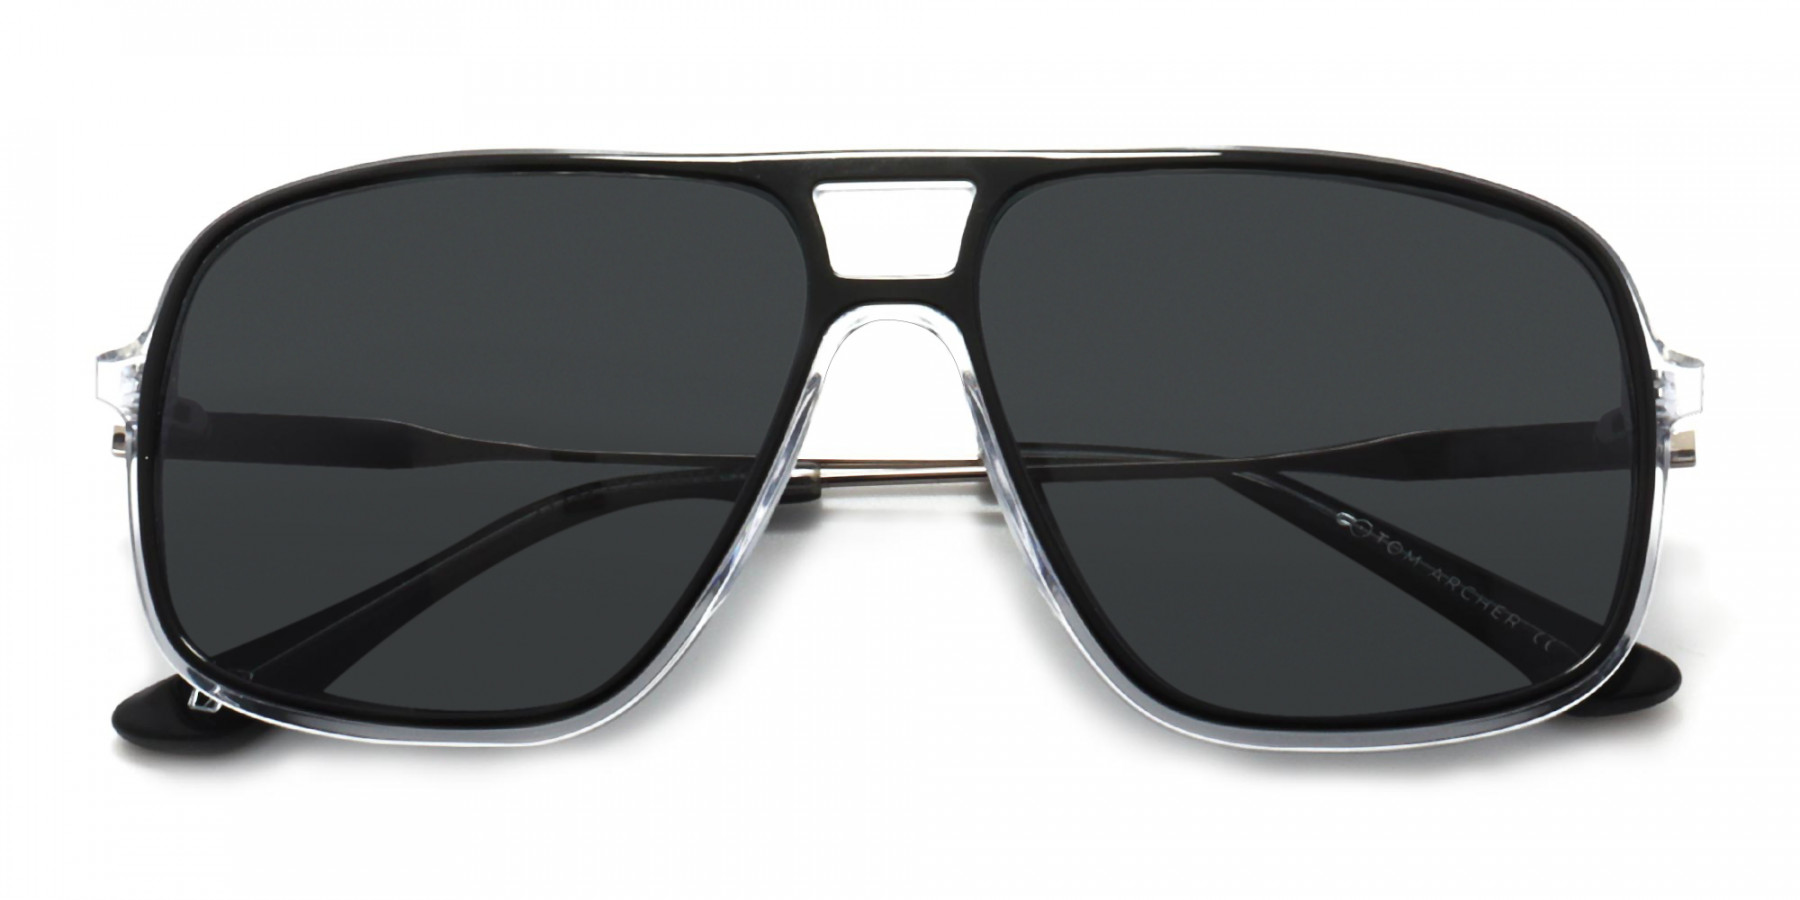 Buy Black Big Size Aviator Sunglasses - Polarised Lenses - Specscart